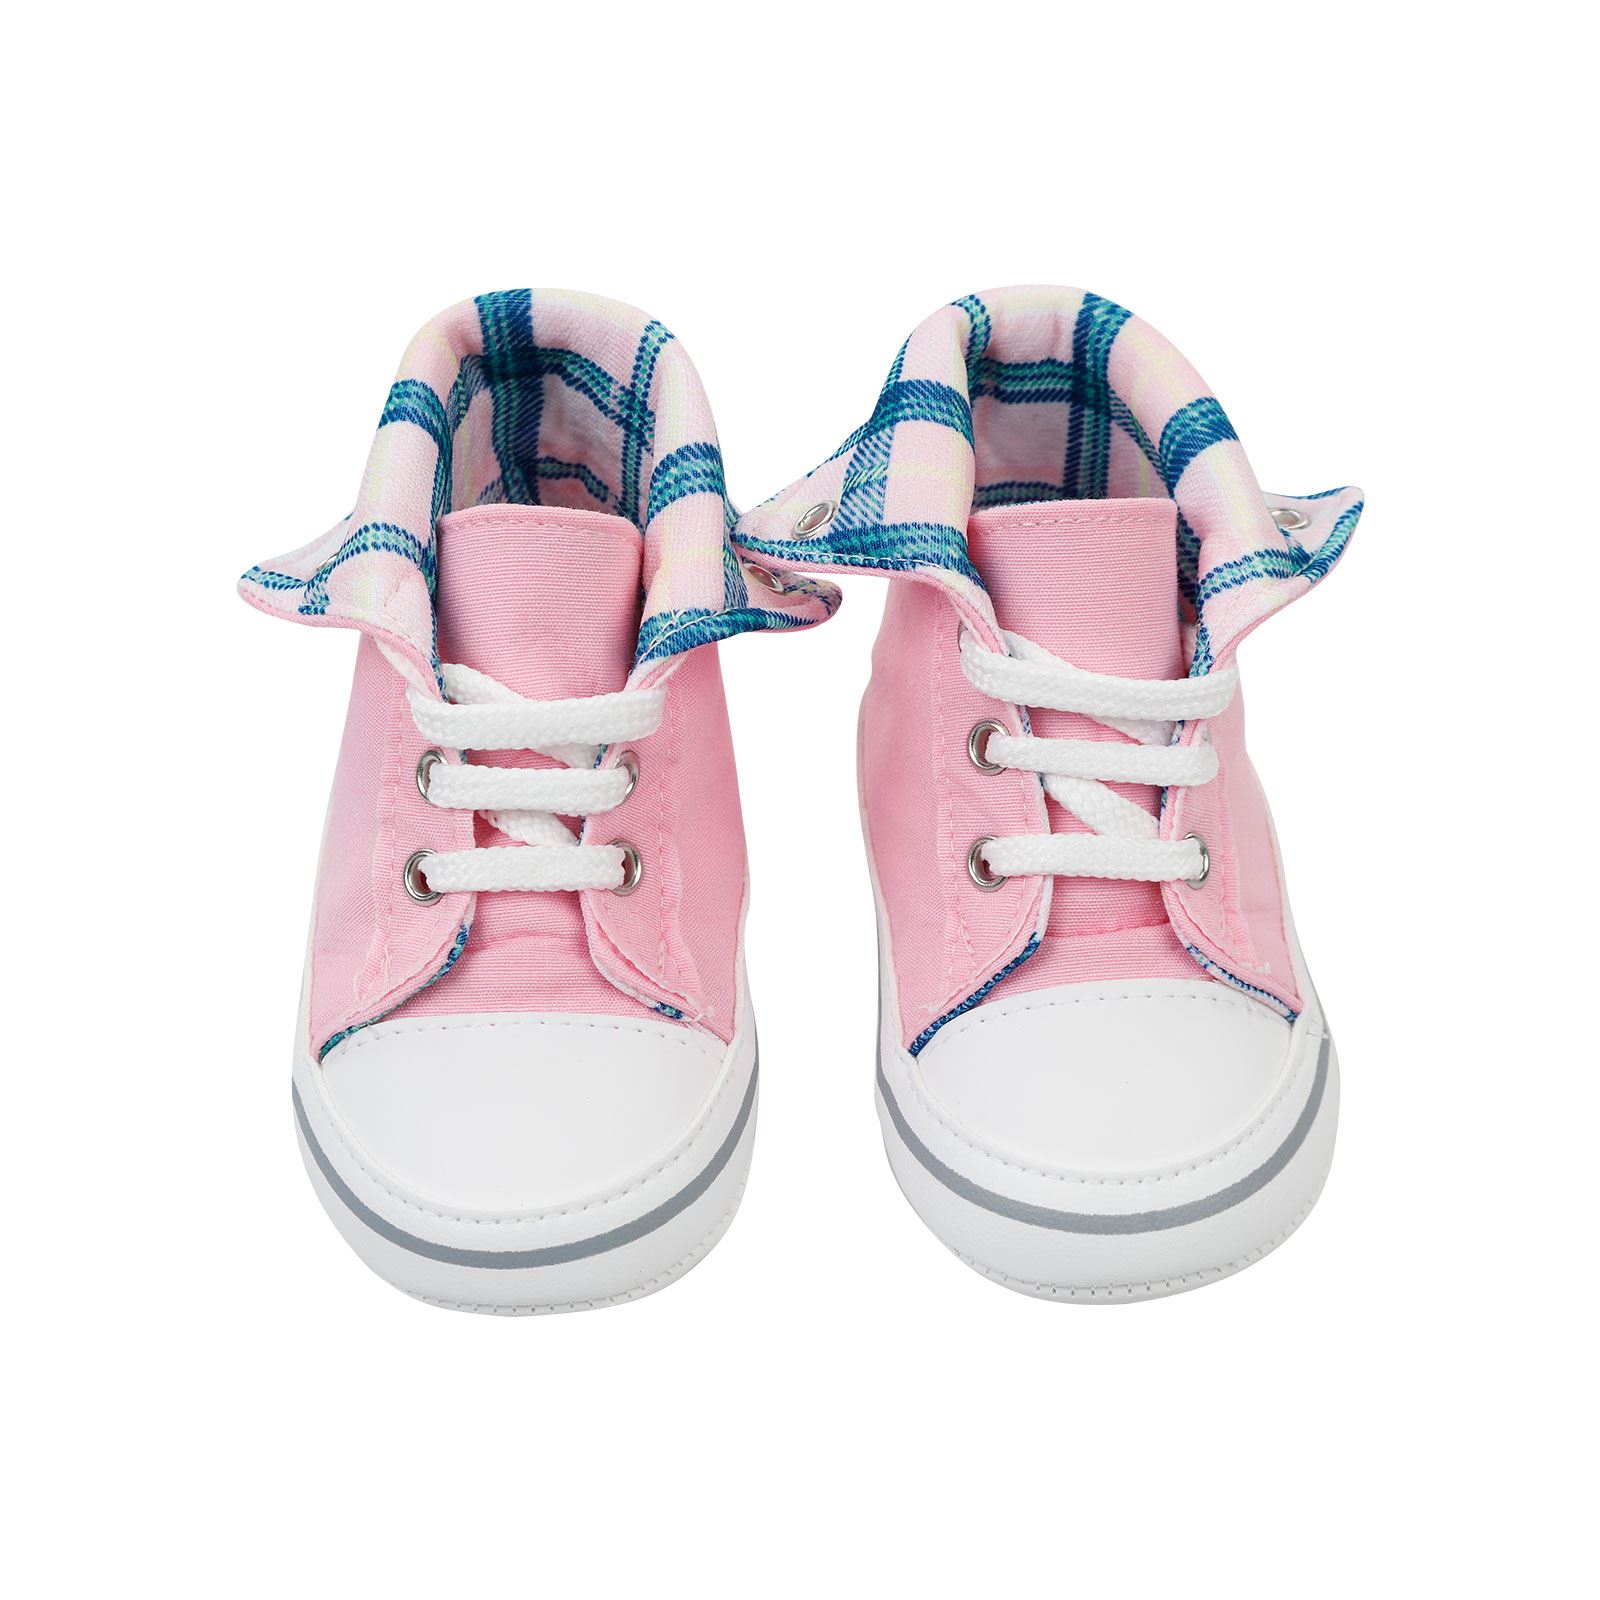 Civil Baby Kız Bebek Patik Ayakkabı 17-19 Numara Pembe